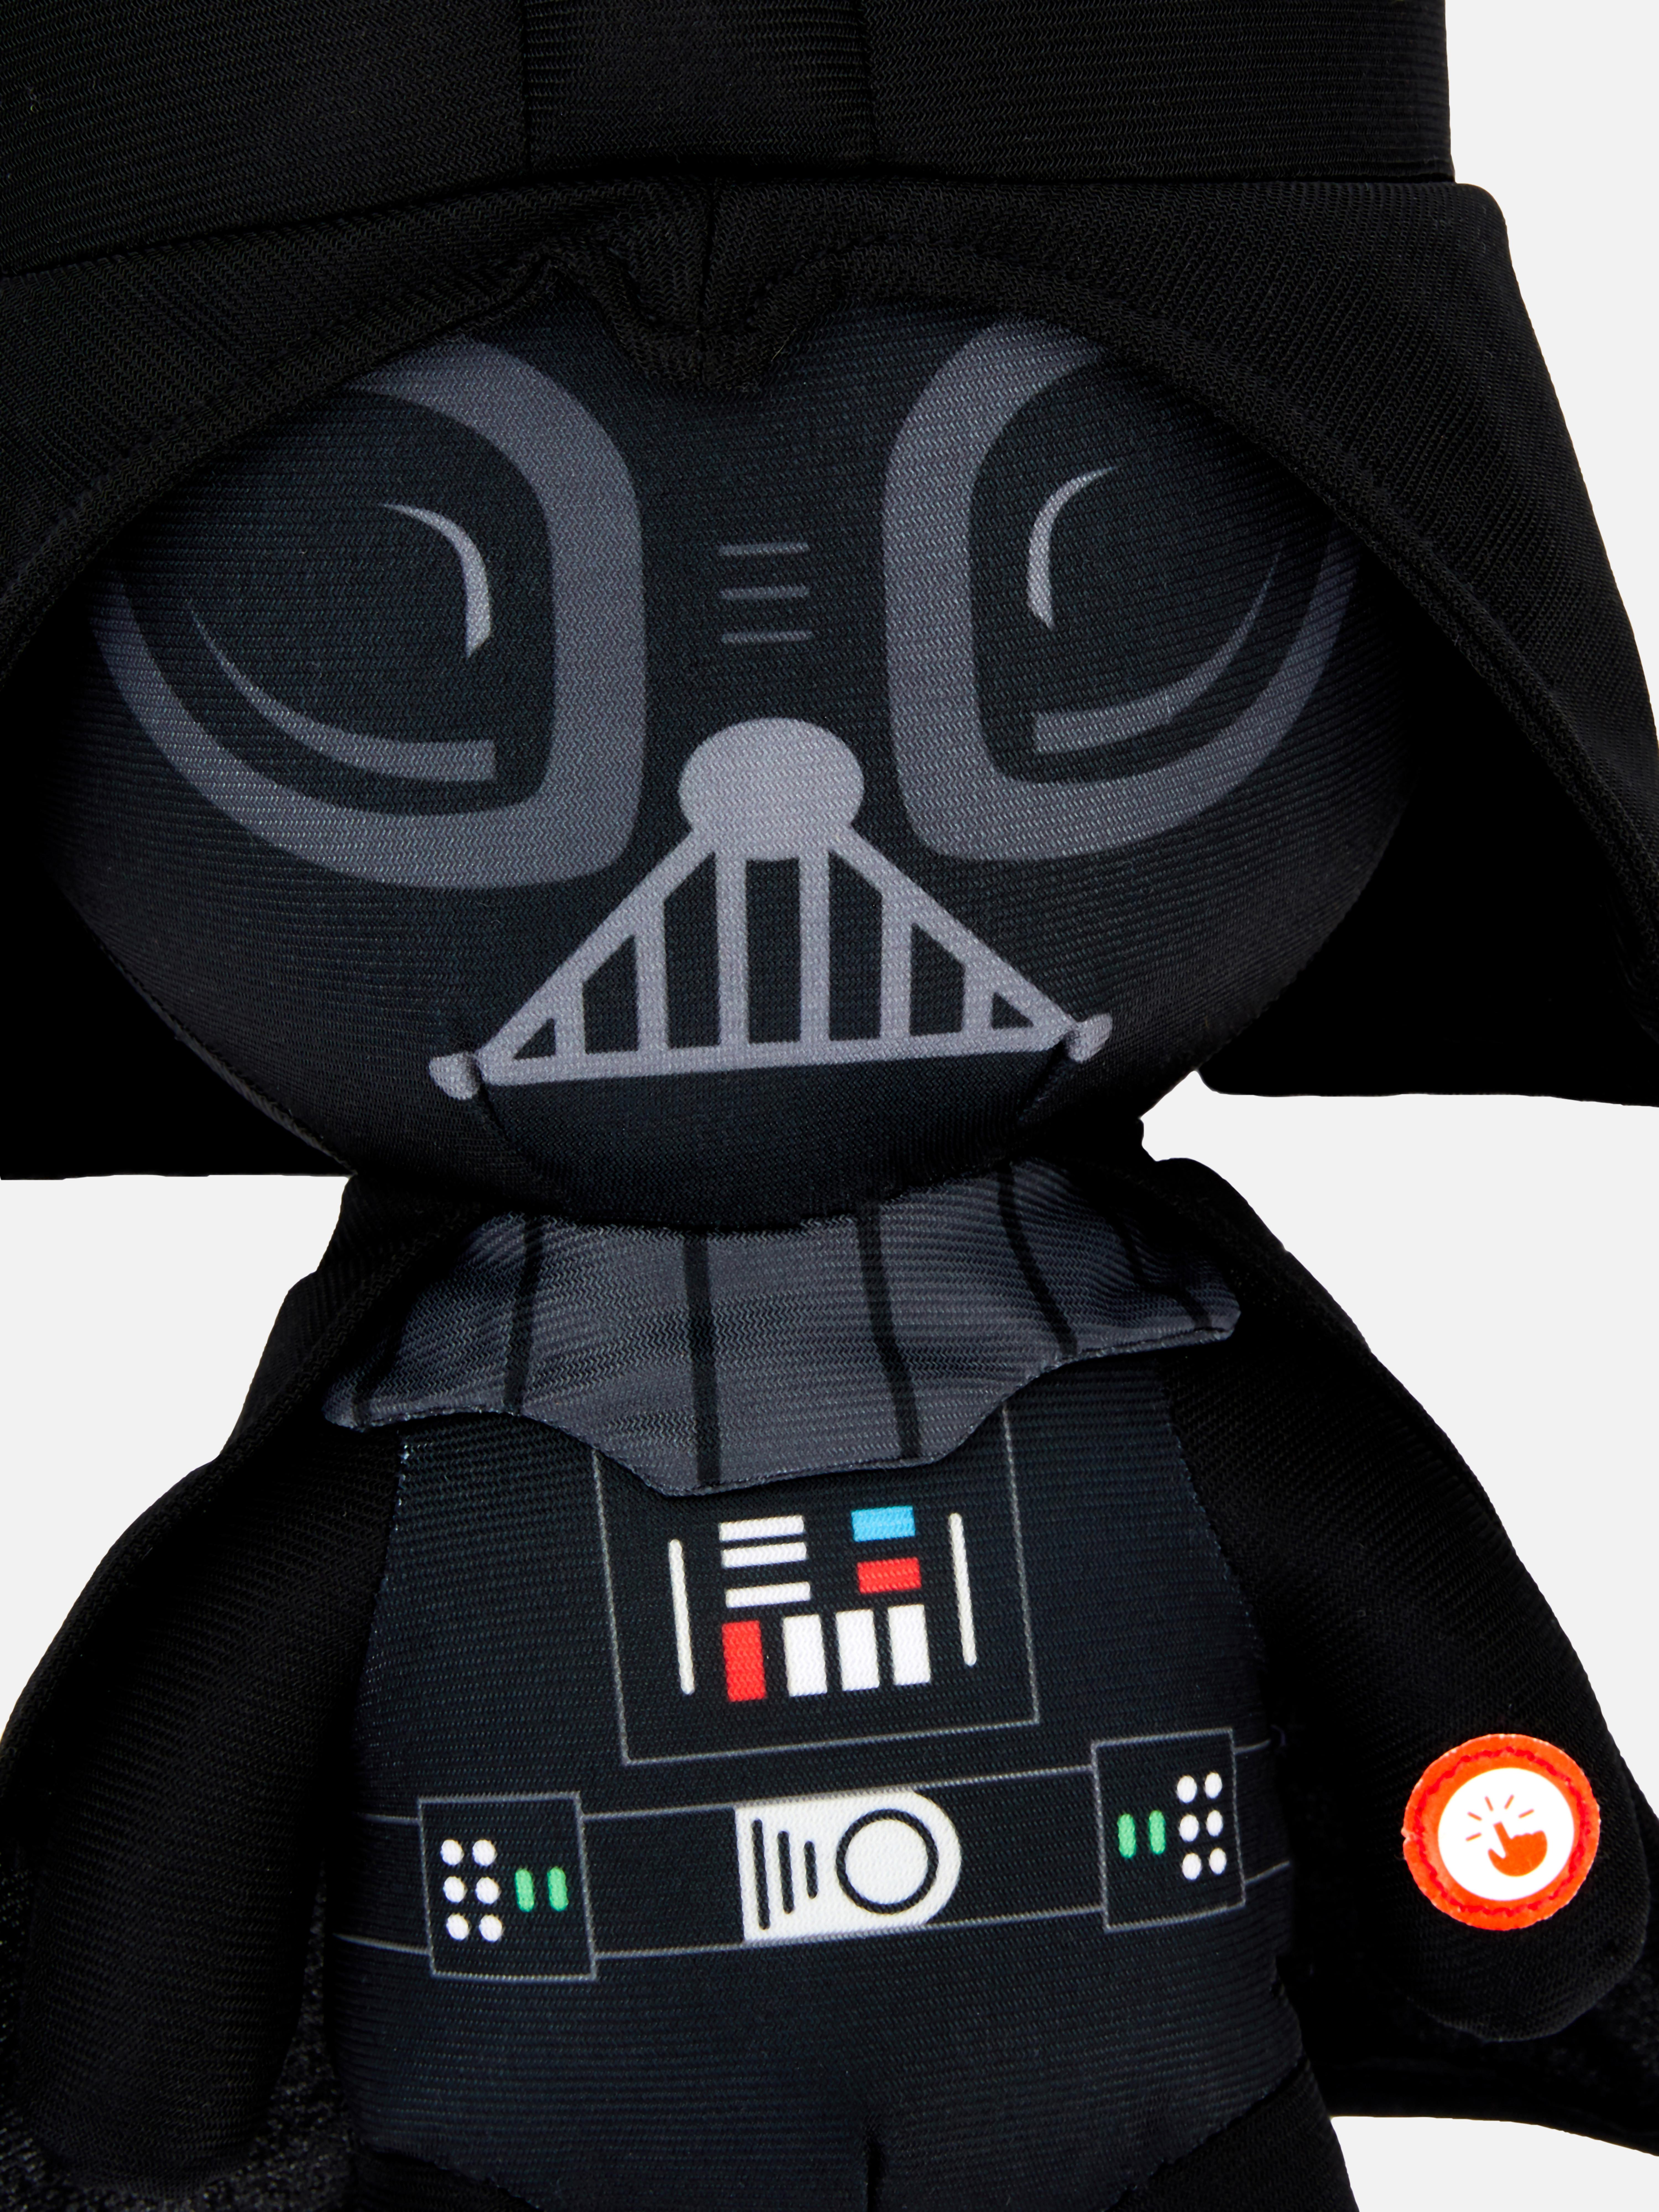 Darth Vader Plush Toy